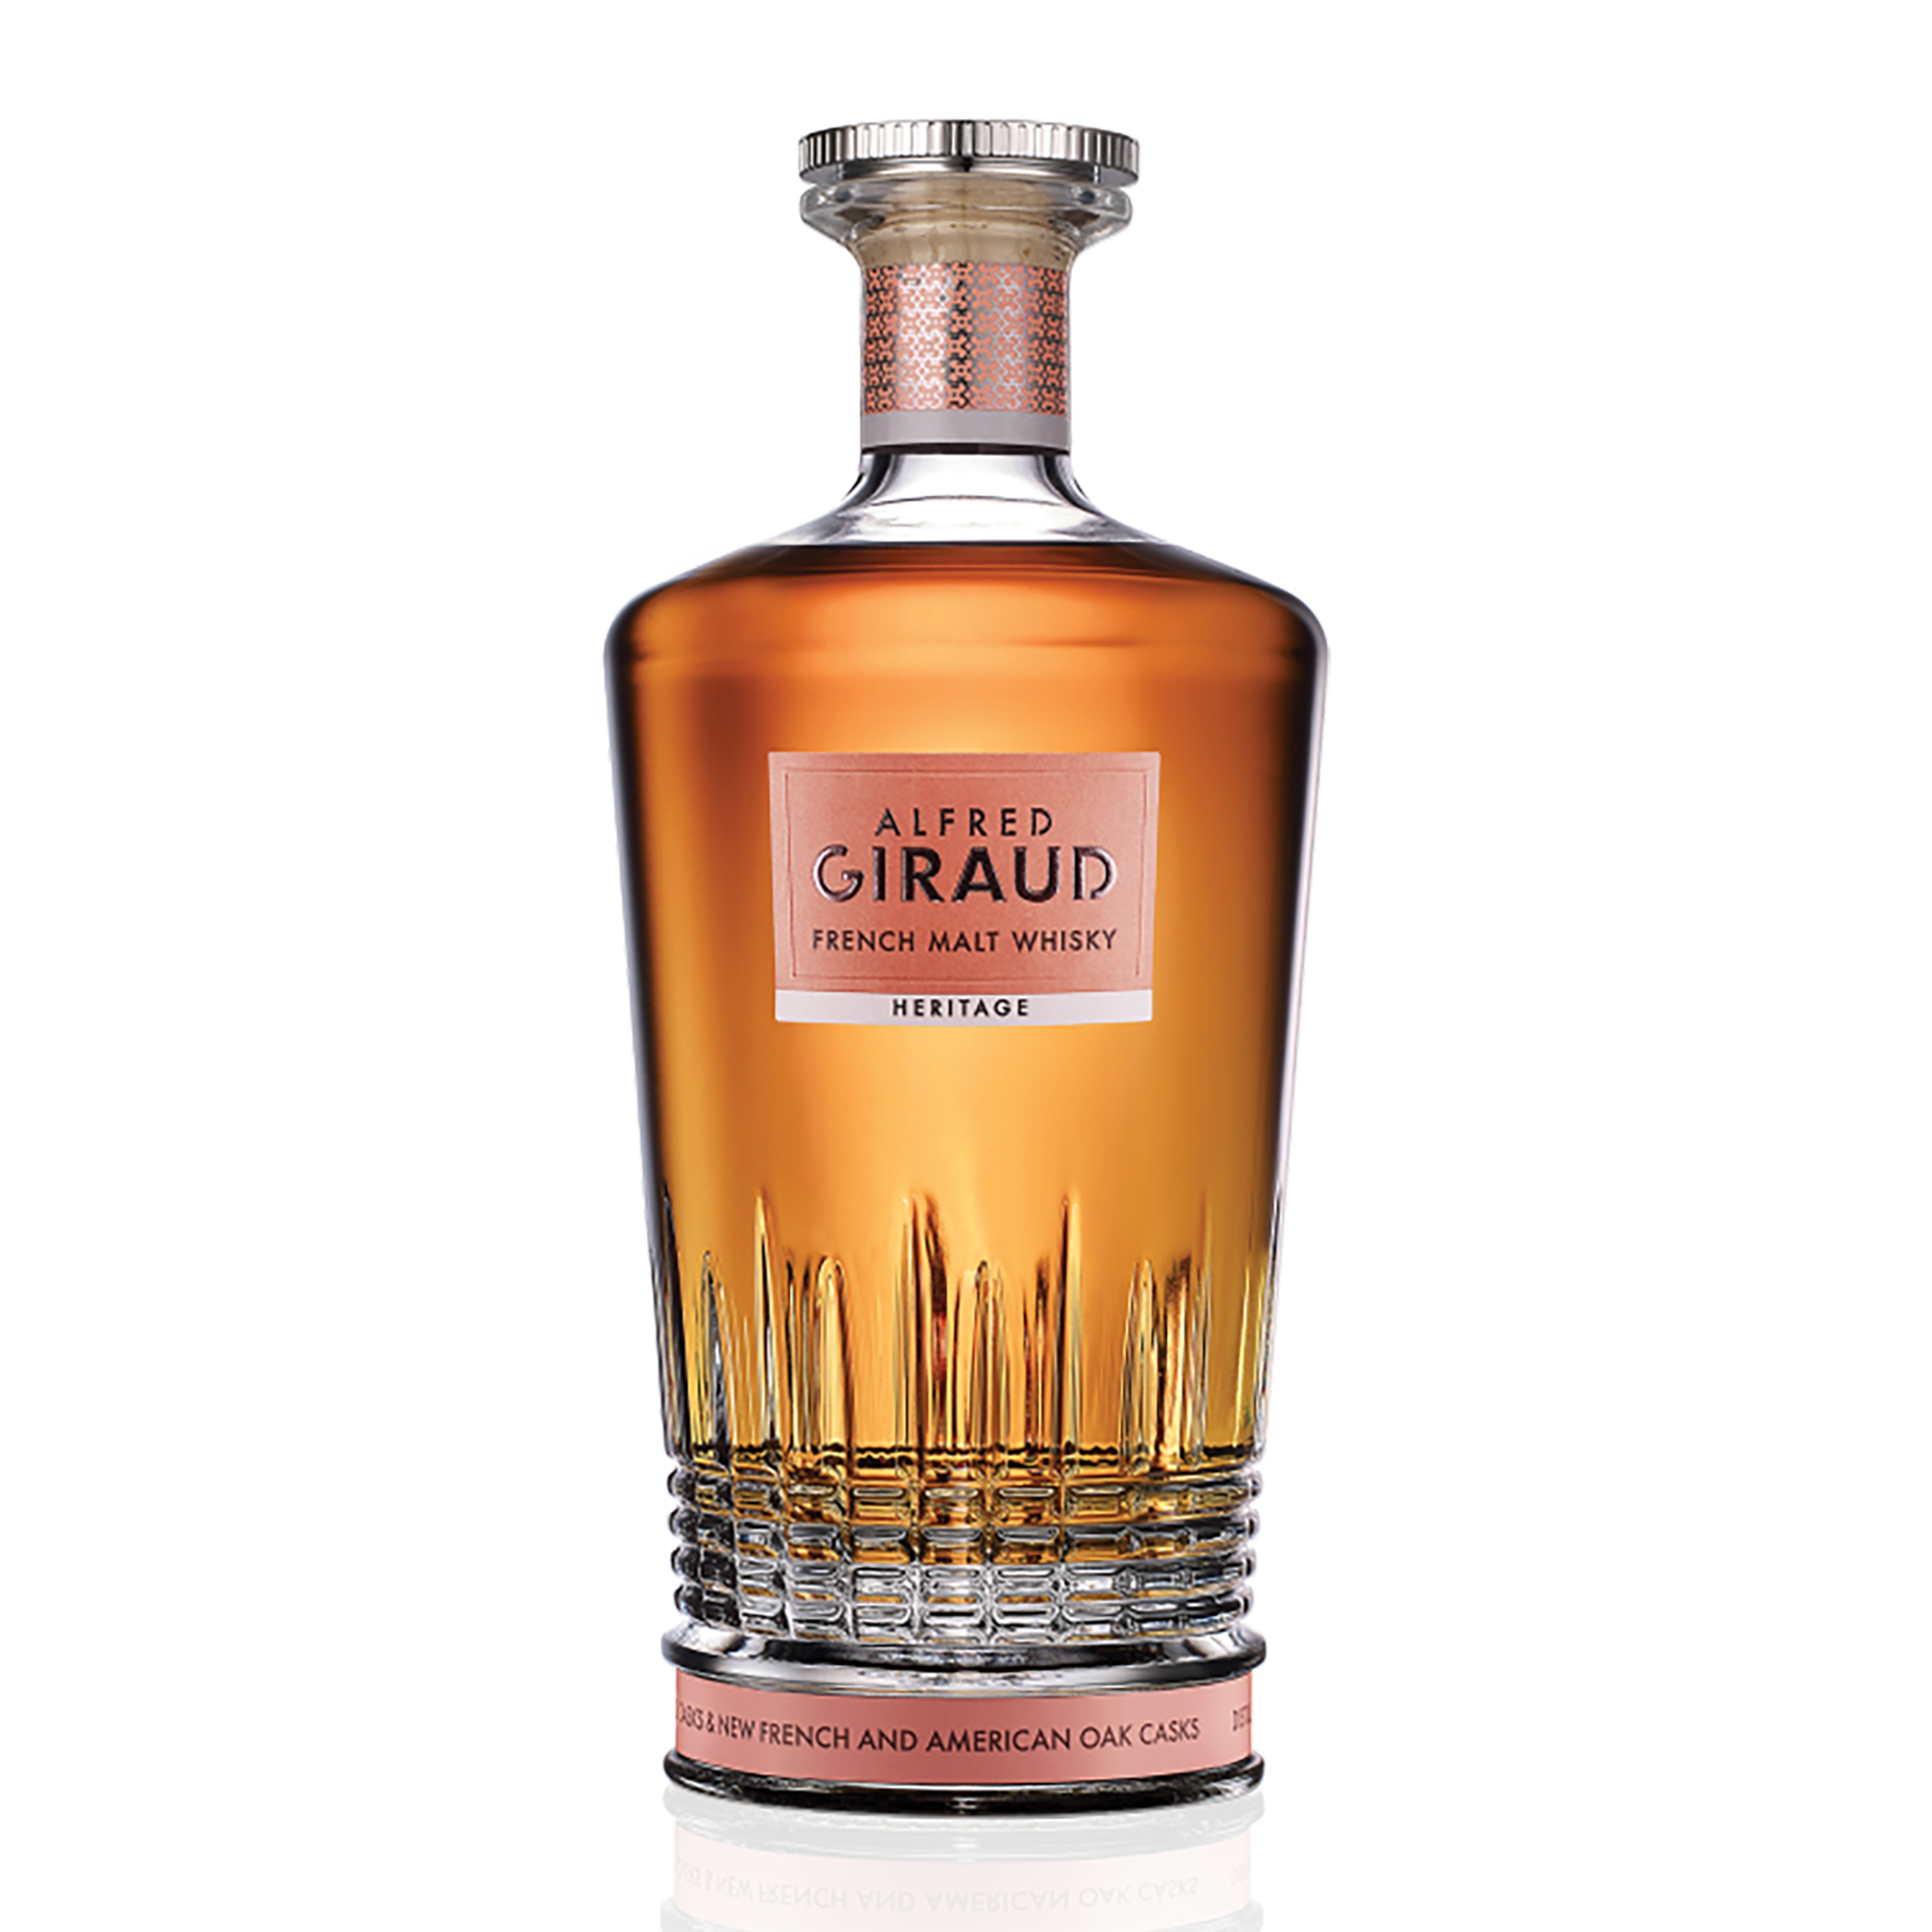 Alfred Giraud Heritage French Malt Whisky 700ml - Kent Street Cellars